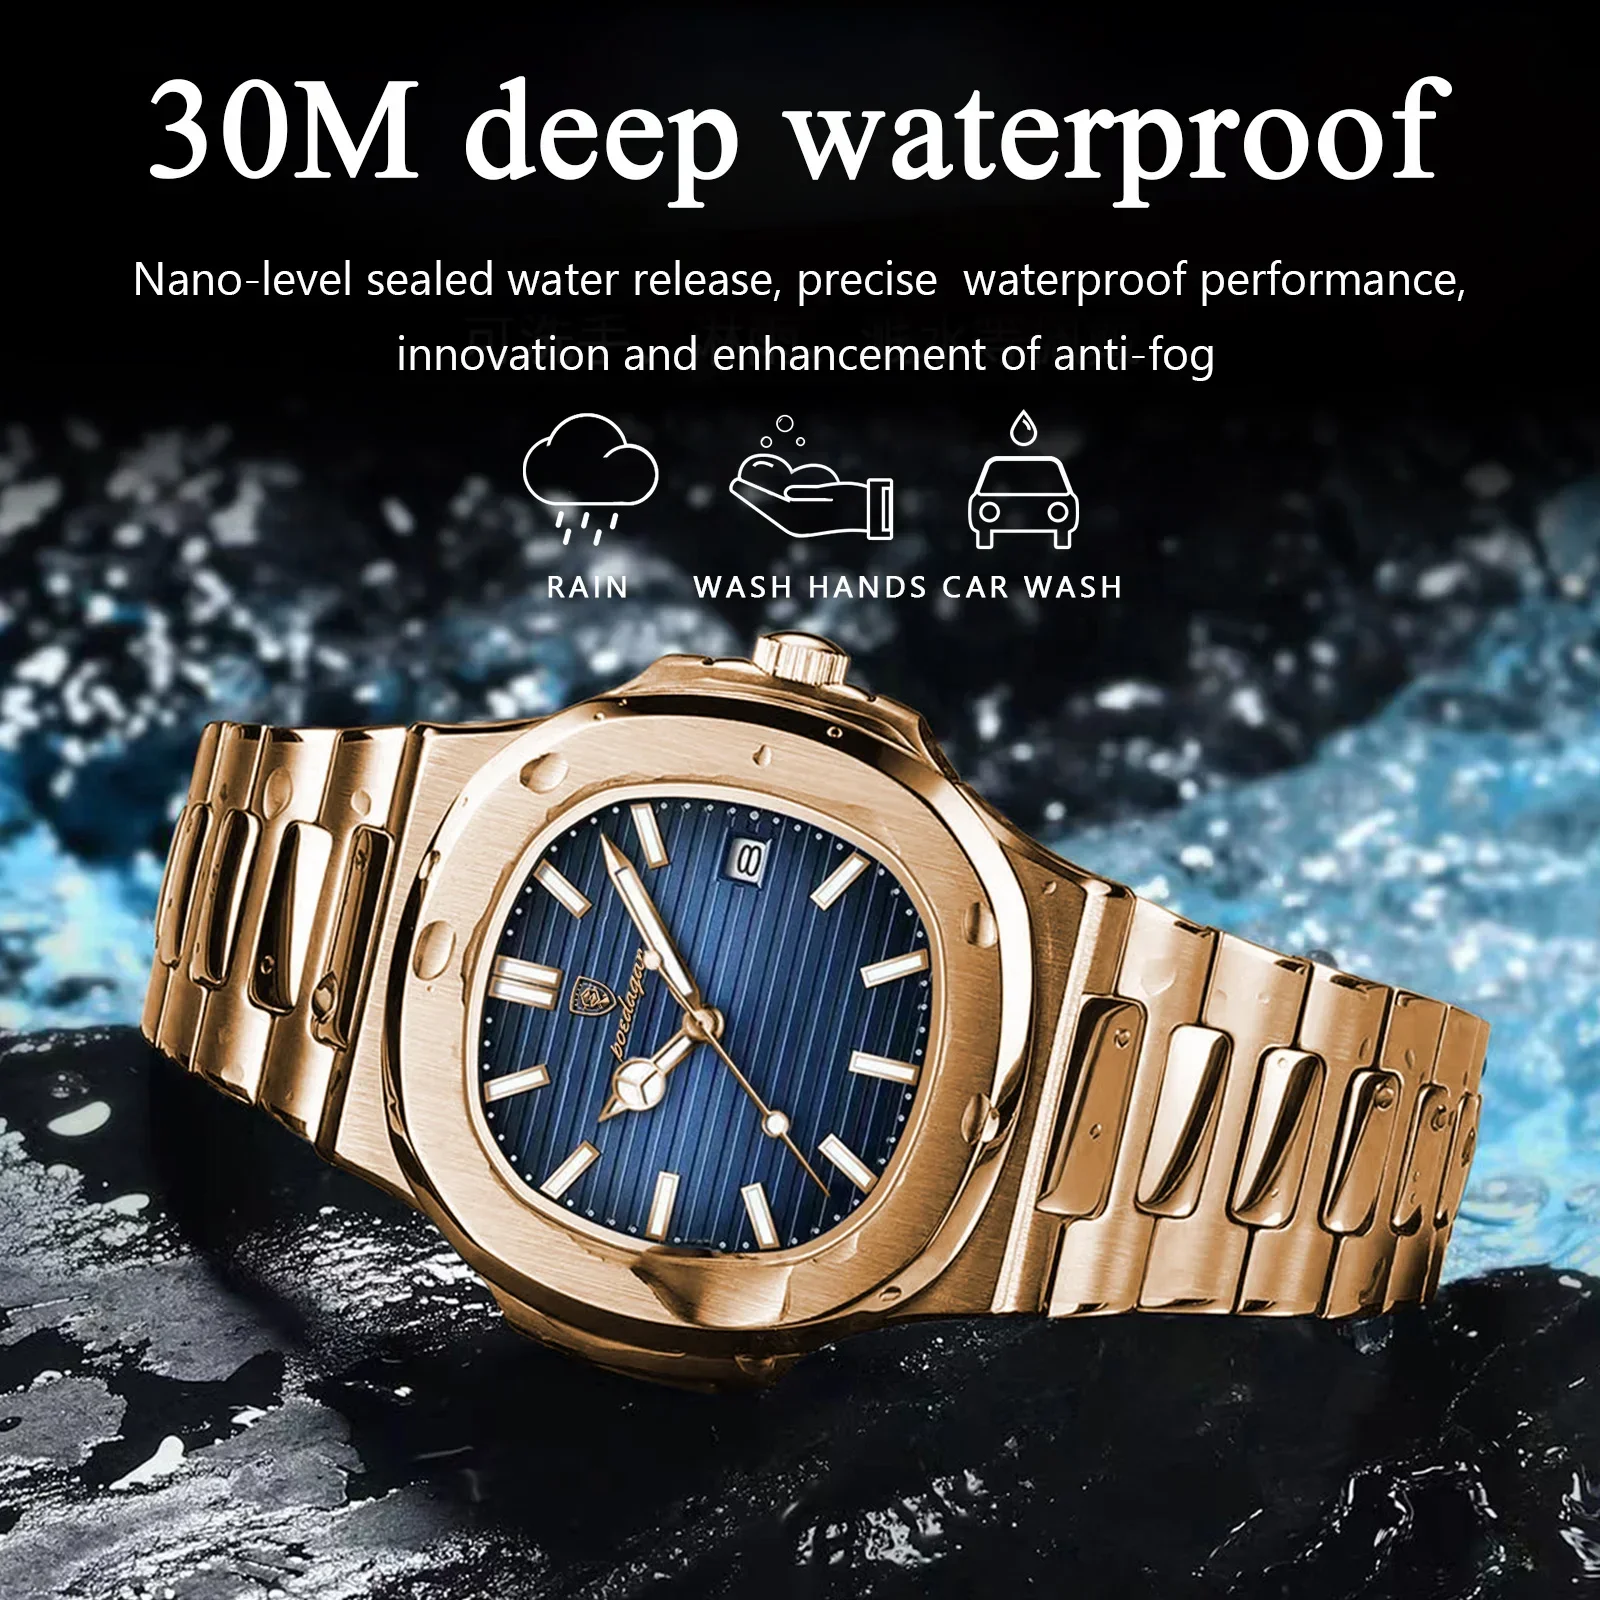 POEDAGAR Fashion Quartz Wristwatches Casual Business Gold Clock Men Luxury Watch Automatic Watches Mens Waterproof Montre Homme